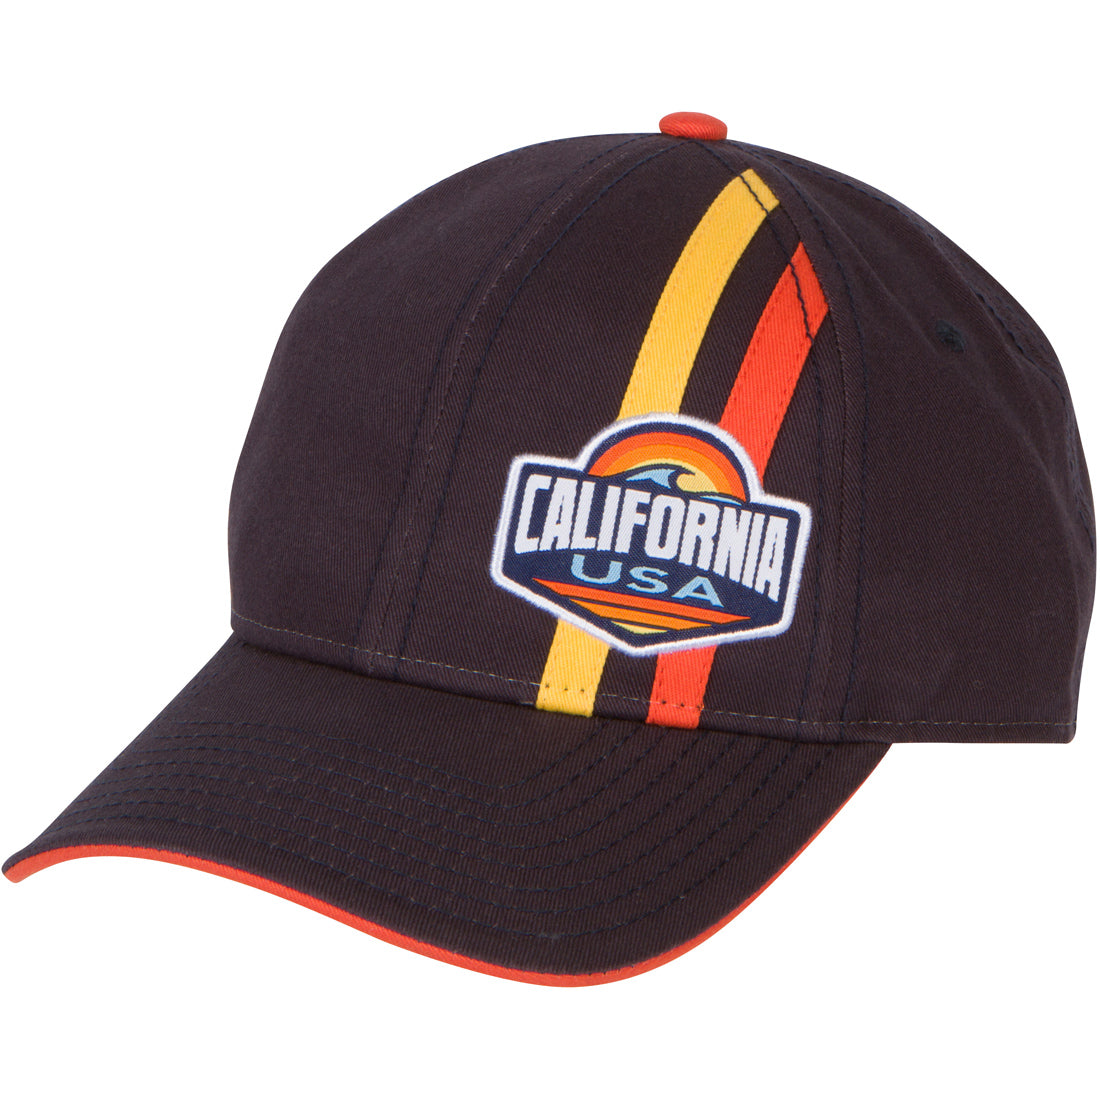 California USA Racing Stripe Baseball Cap - Navy